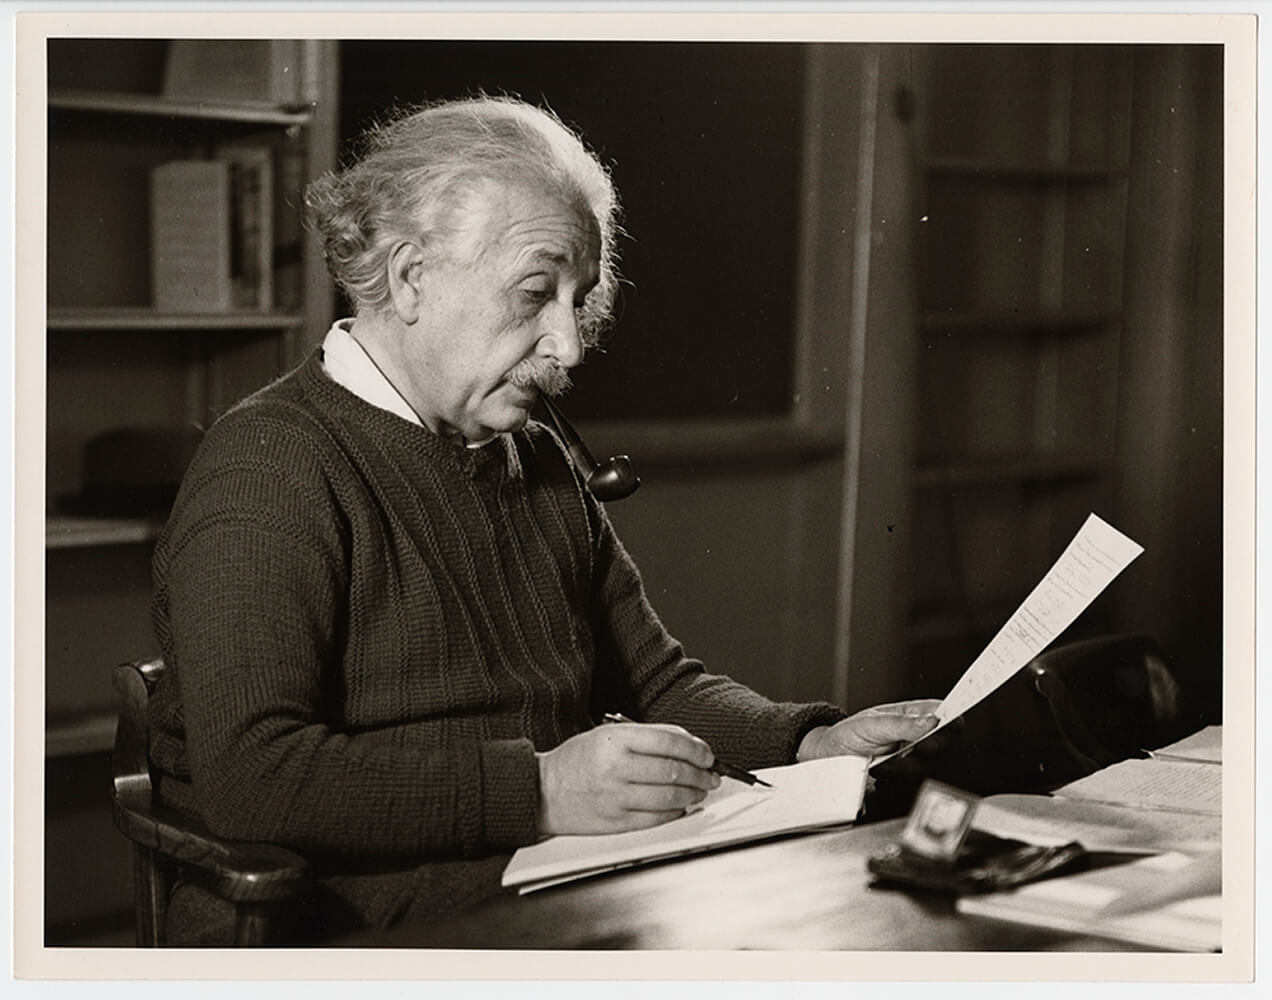 Photograph [2016-6-10]: [Albert Einstein in his office, Princeton University, New Jersey], 1942, Roman Vishniac